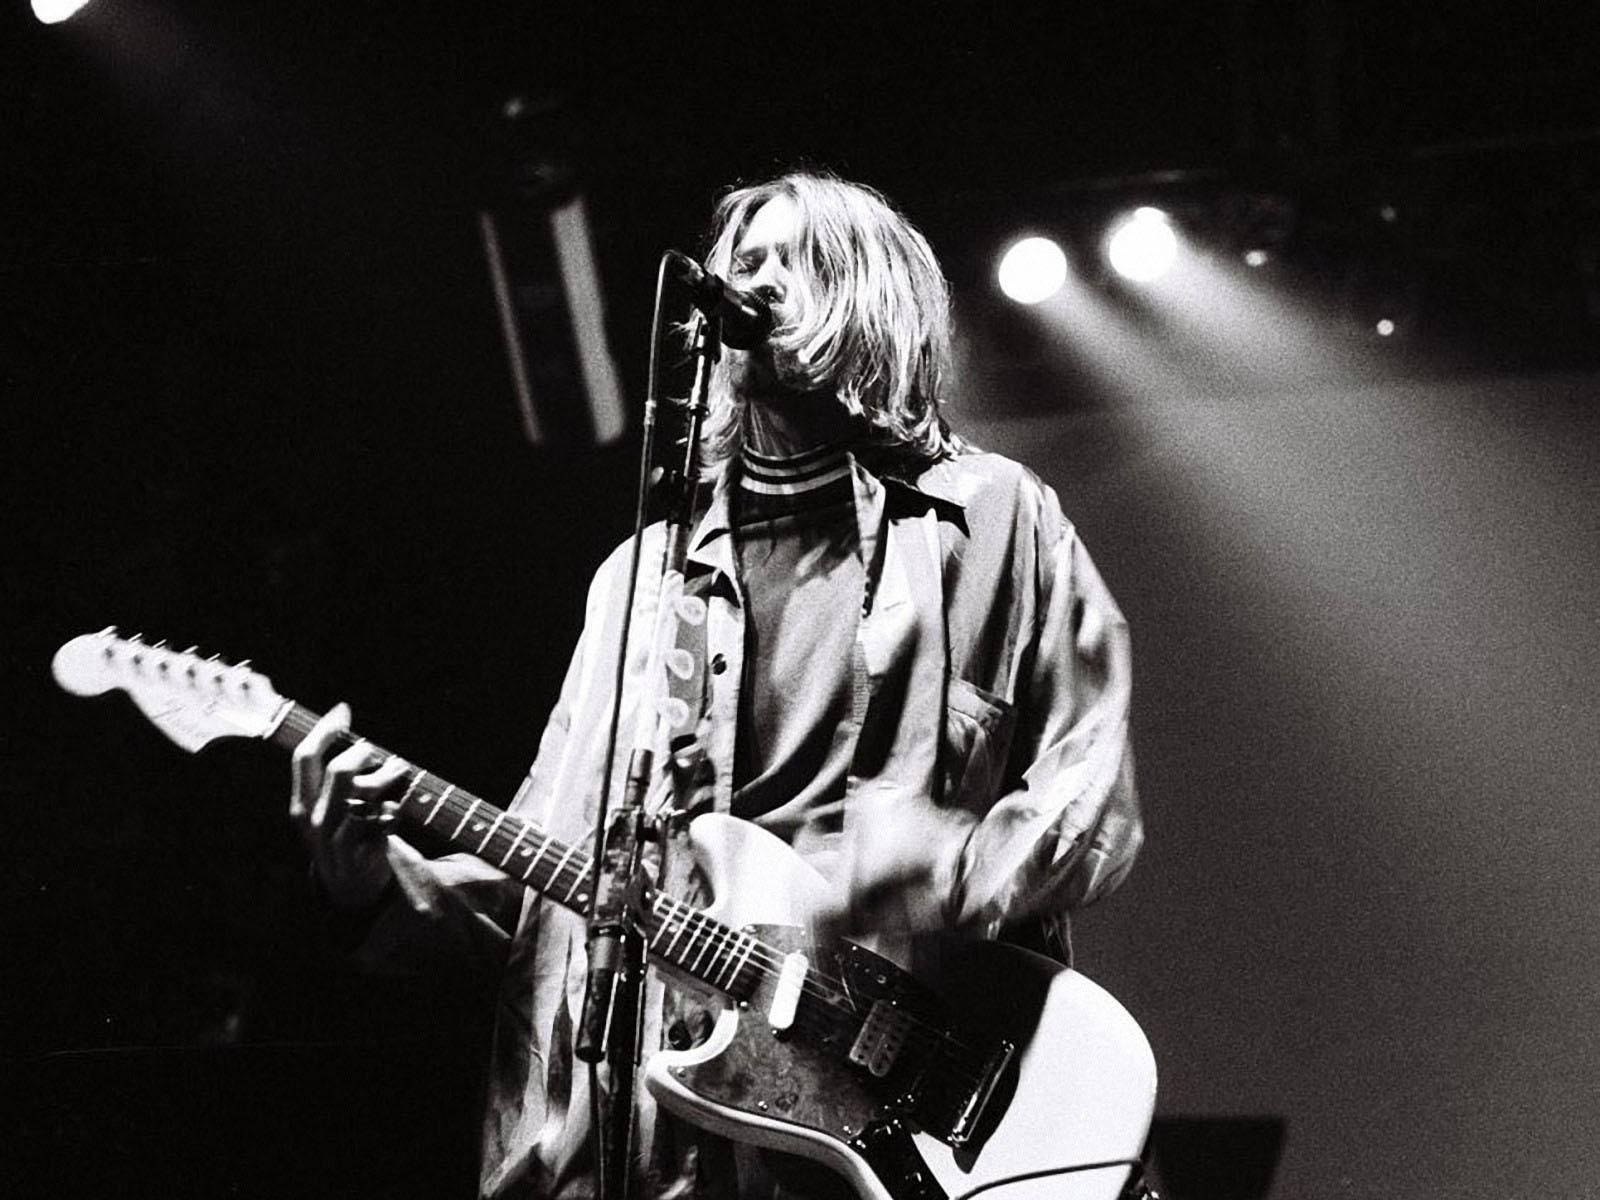 Nirvana's Dynamic Lead Vocalist